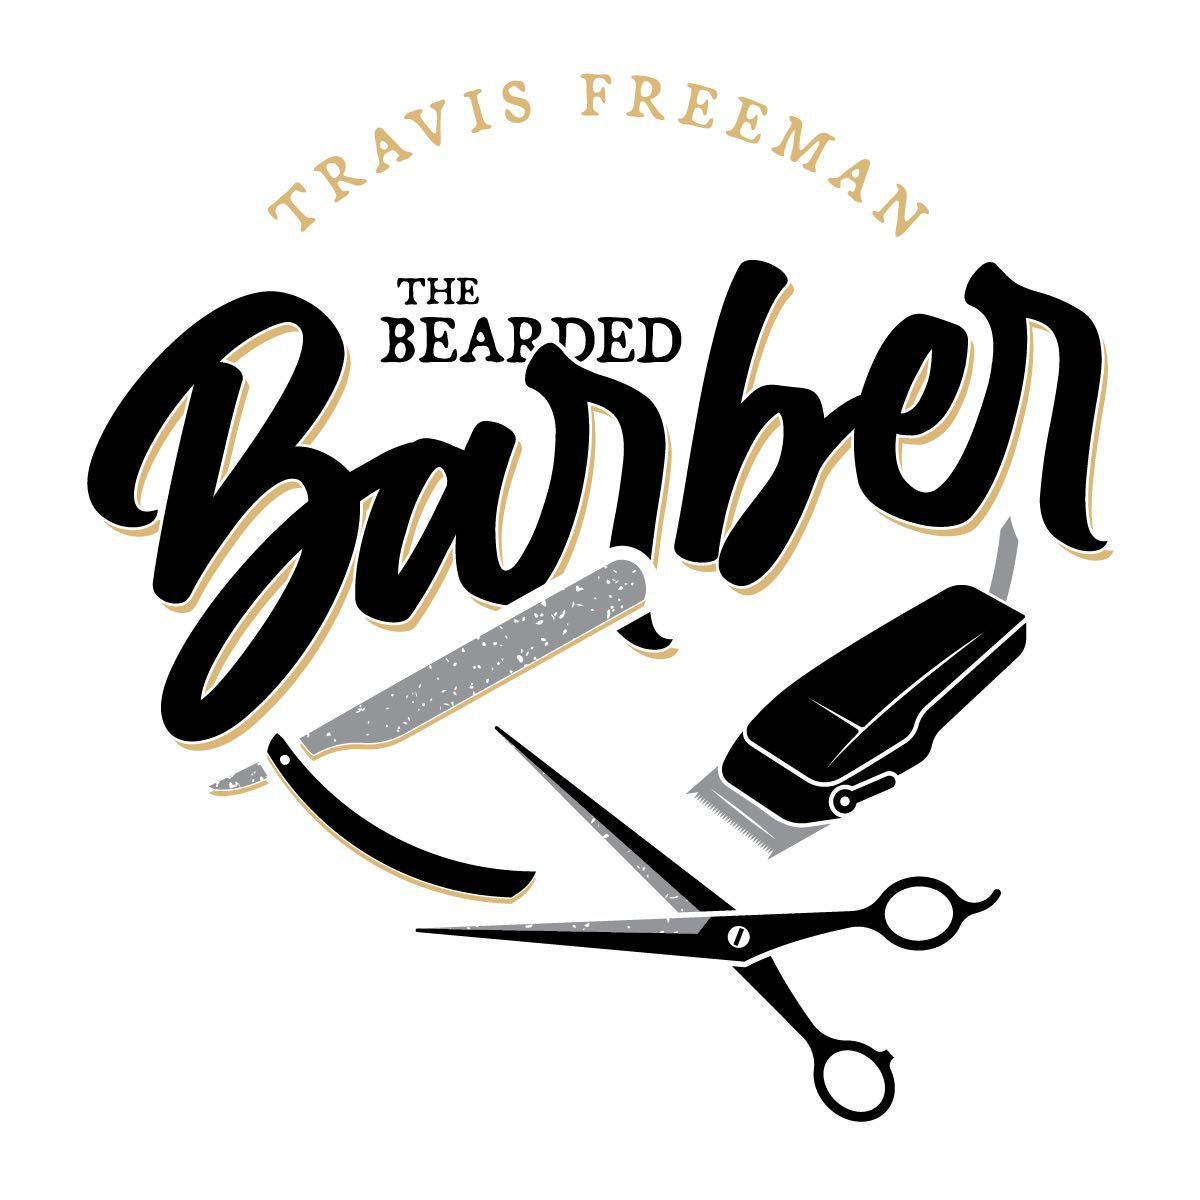 Travis Freeman @ South End Barbershop, 404 N Main St, China Grove, 28023